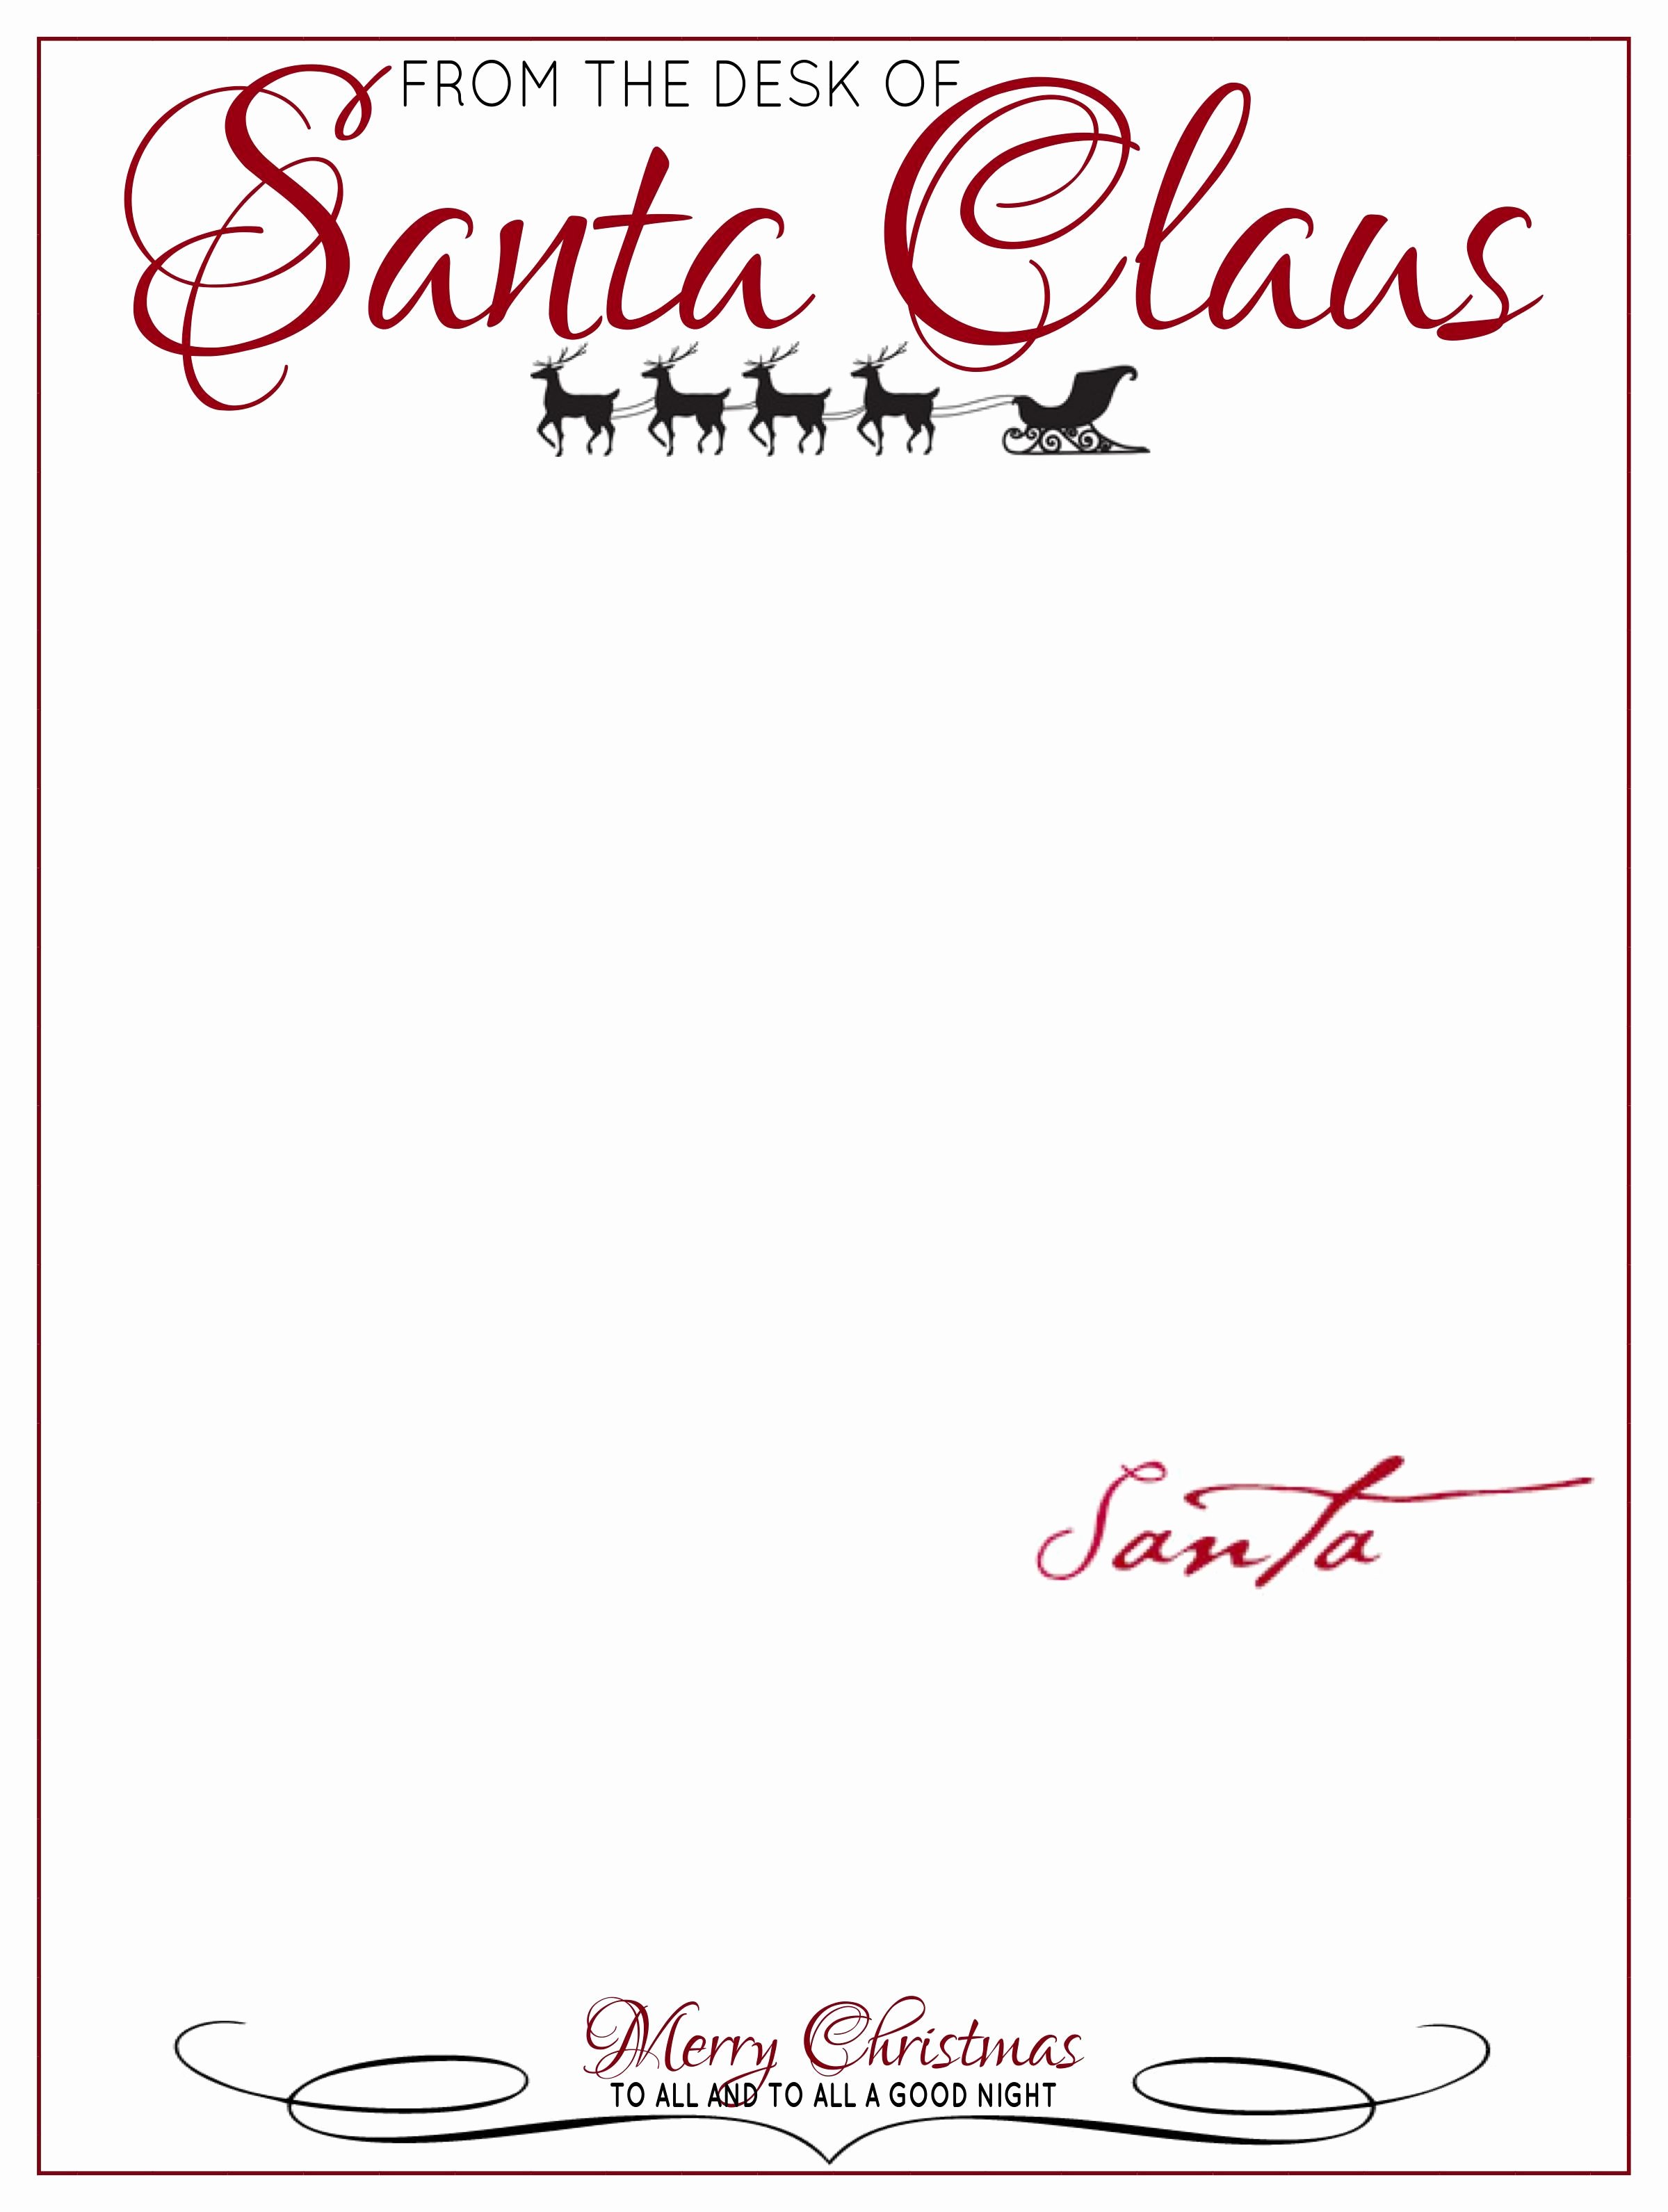 Free Santa Letter Template Unique the Desk Of Letter Head From Santa Claus …